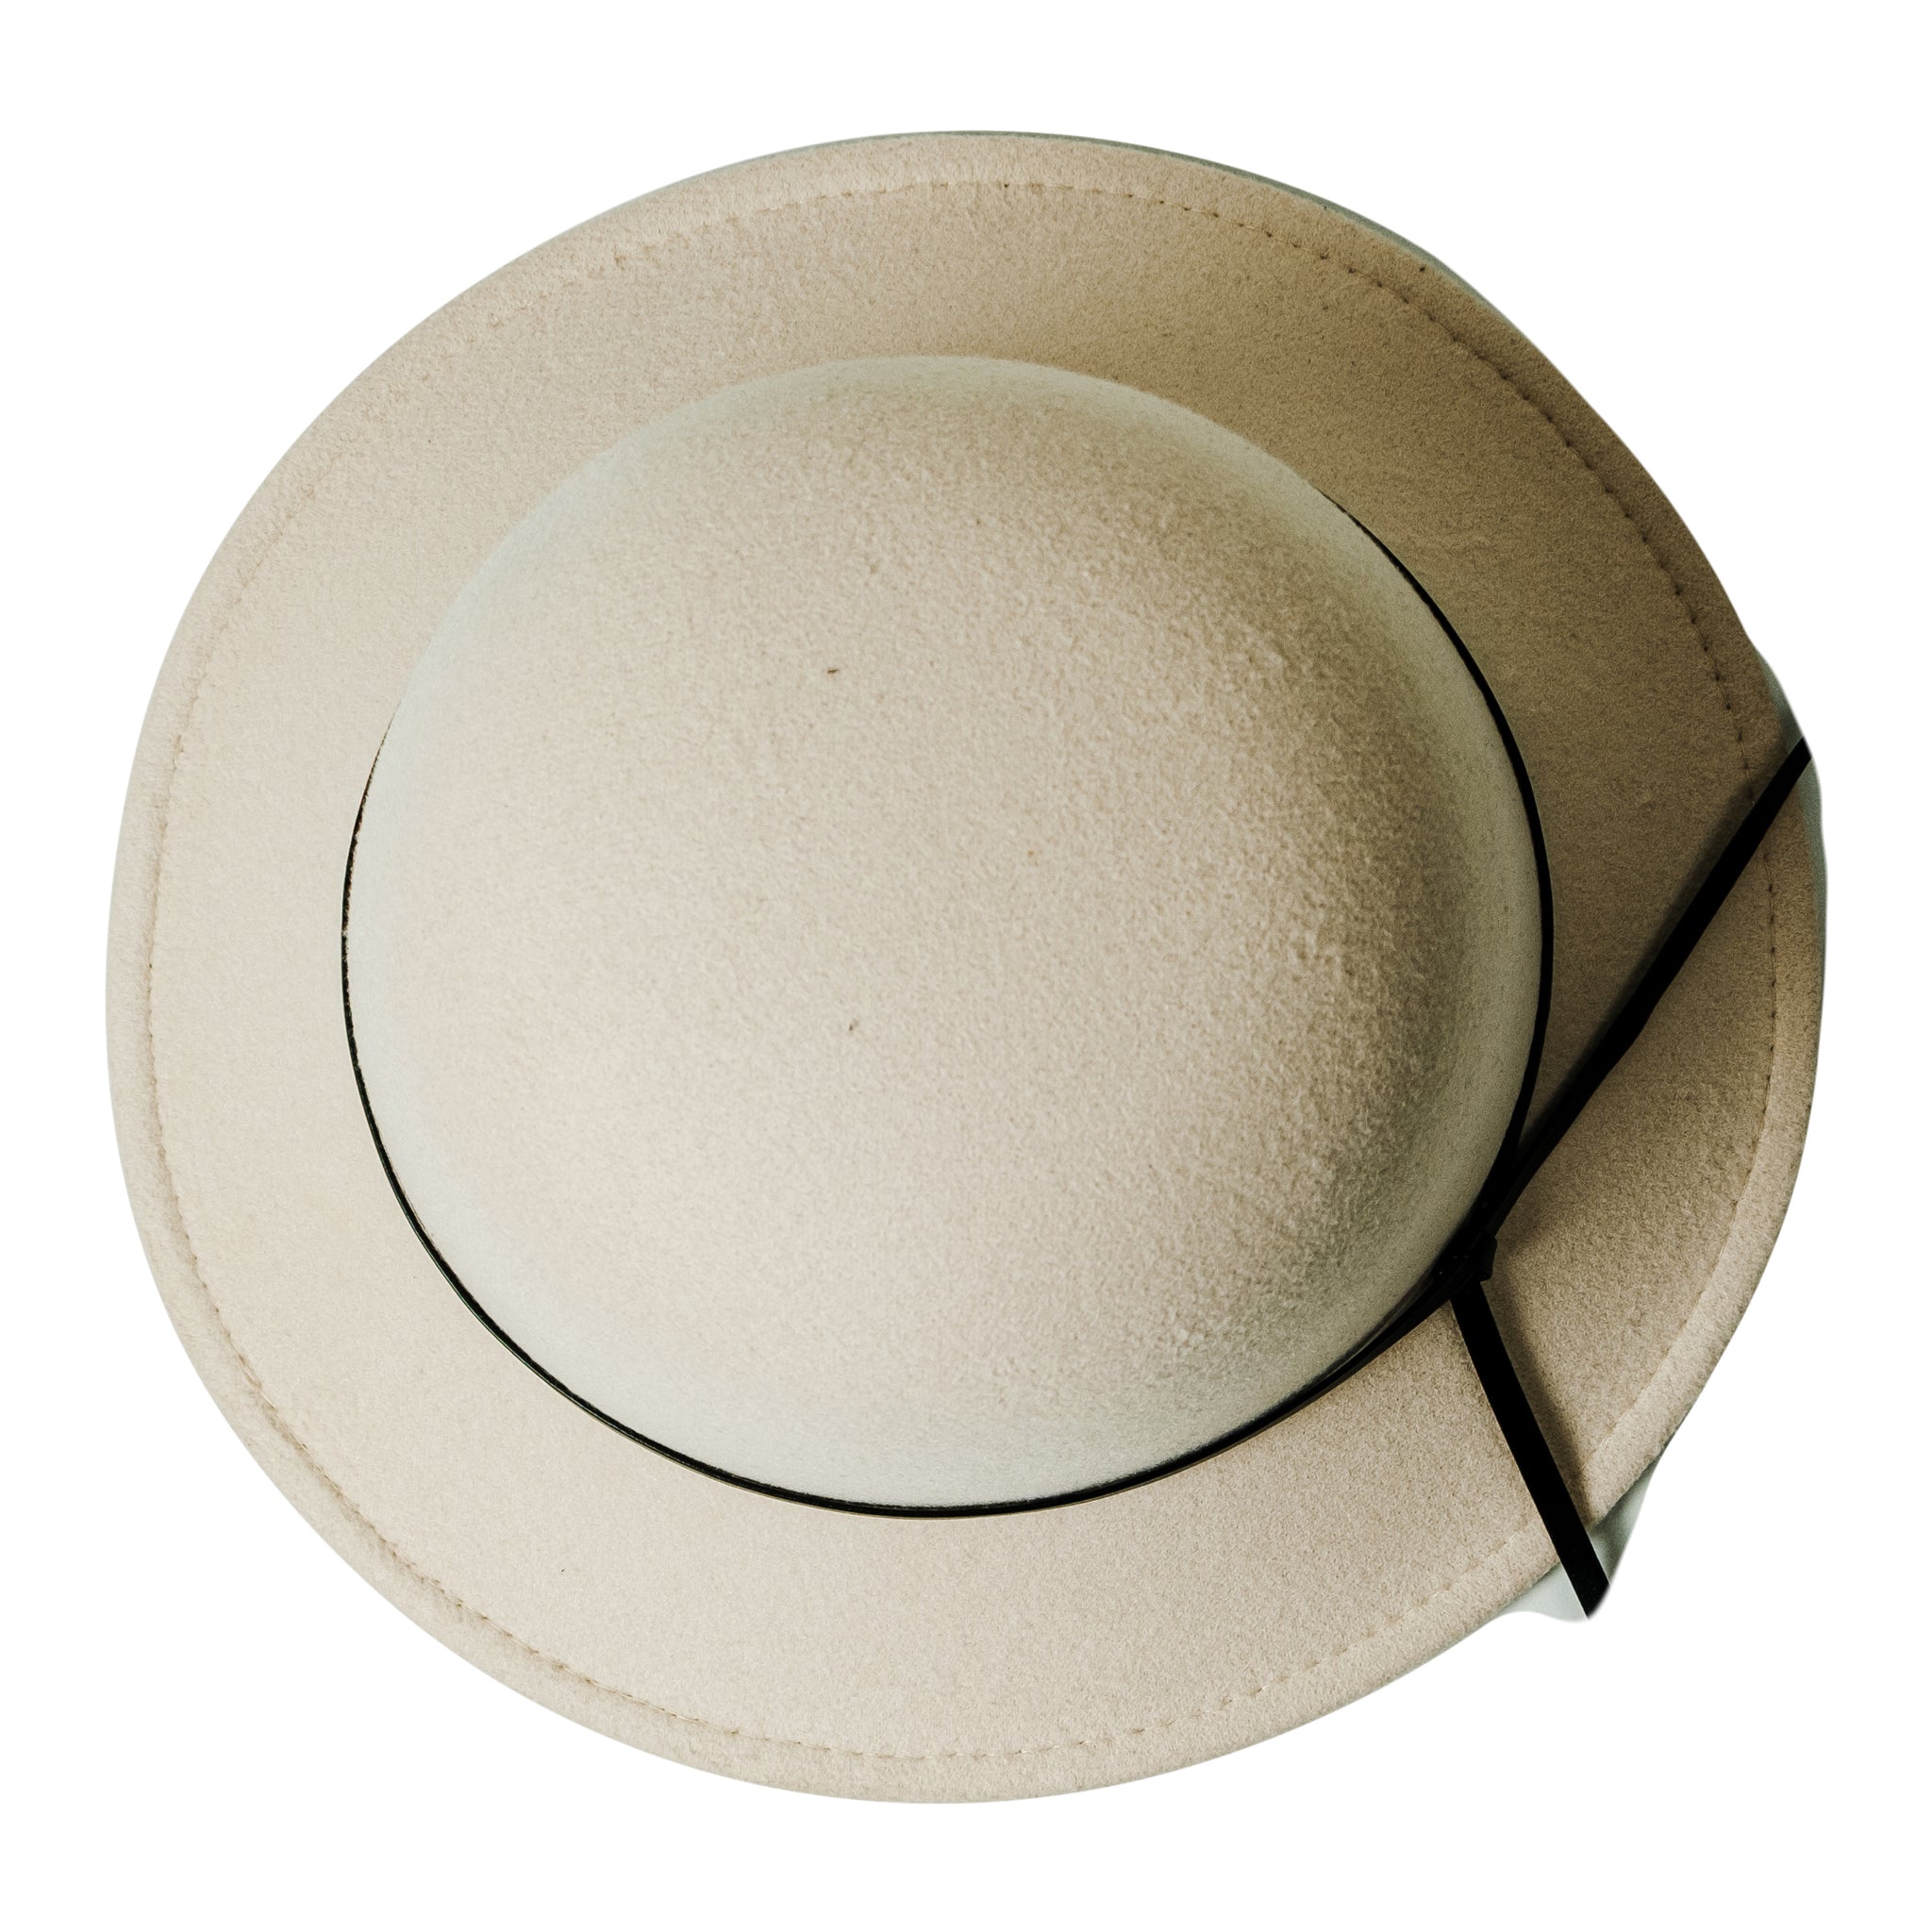 Chokore Trendy Cloche Hat (Beige)